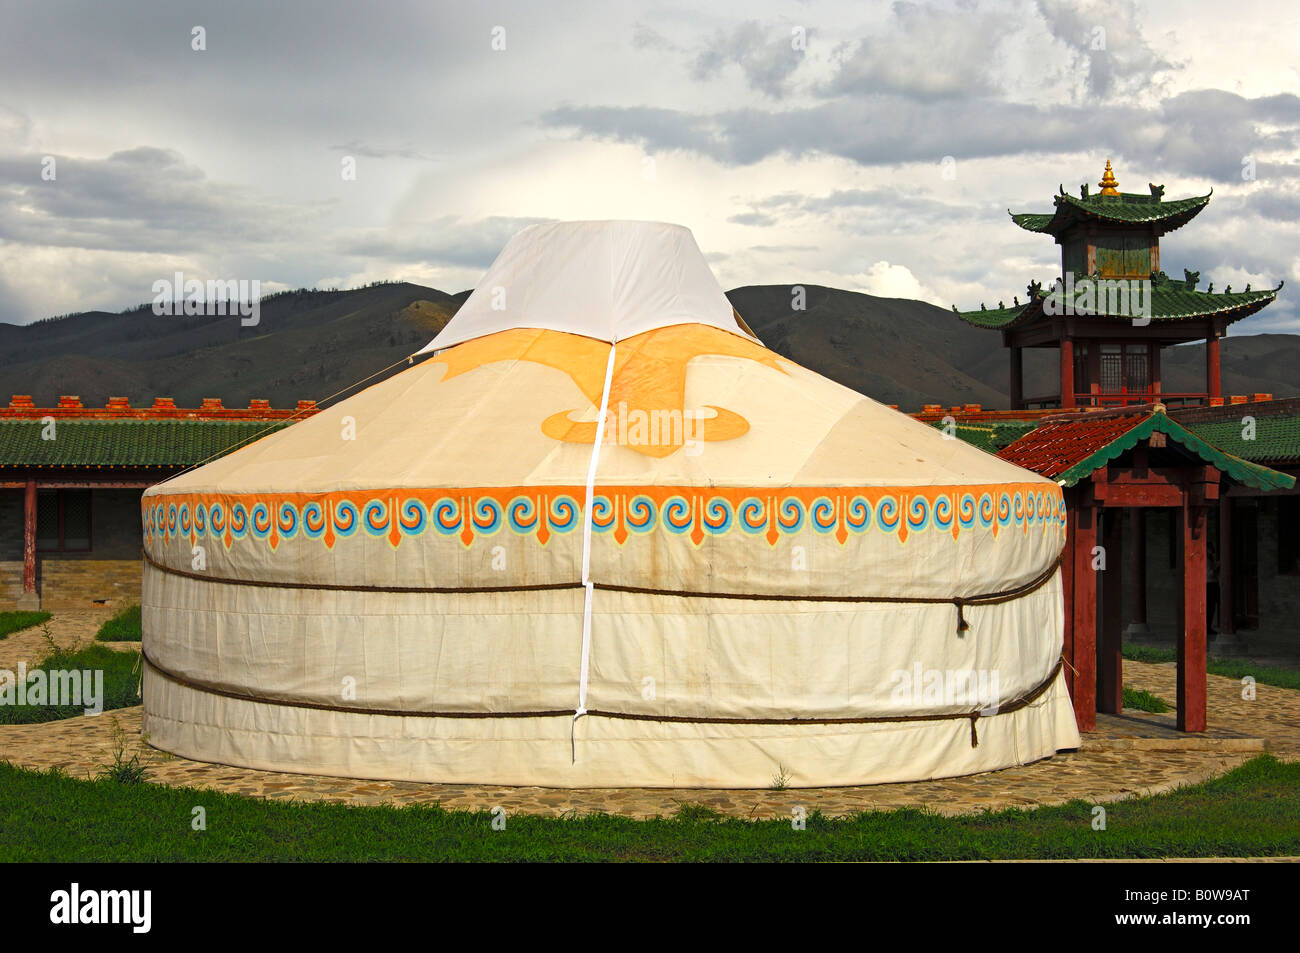 Traditional Mongolian yurt used for accommodation at the Mongolia Hotel, Ulan Bator or Ulaanbaatar, Mongolia, Asia Stock Photo